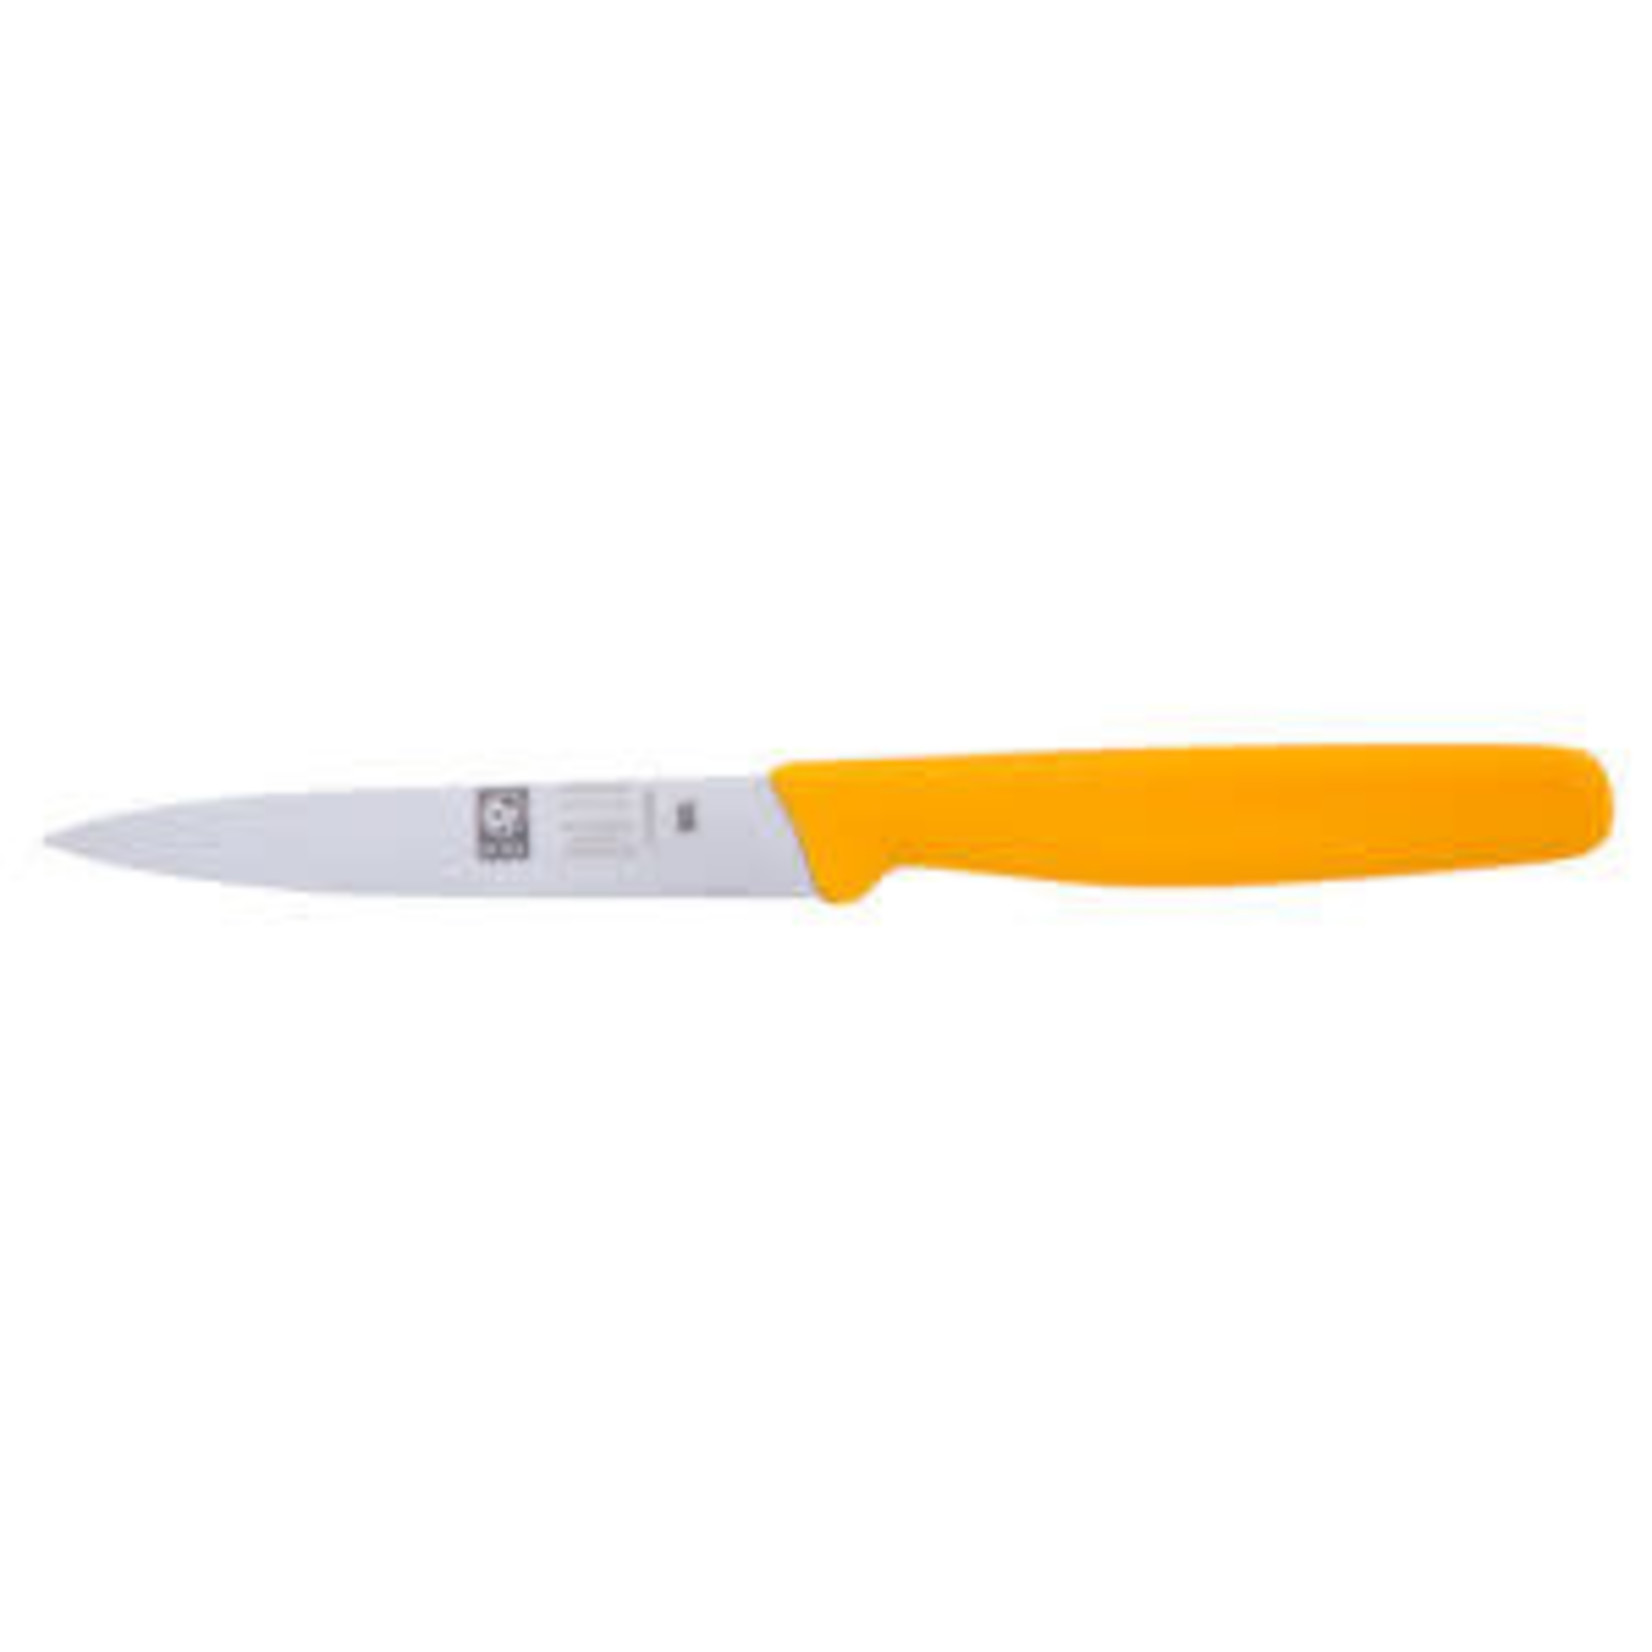 https://cdn.shoplightspeed.com/shops/627977/files/43348113/1652x1652x2/discount-hardware-icel-yellow-4-inch-paring-knife.jpg